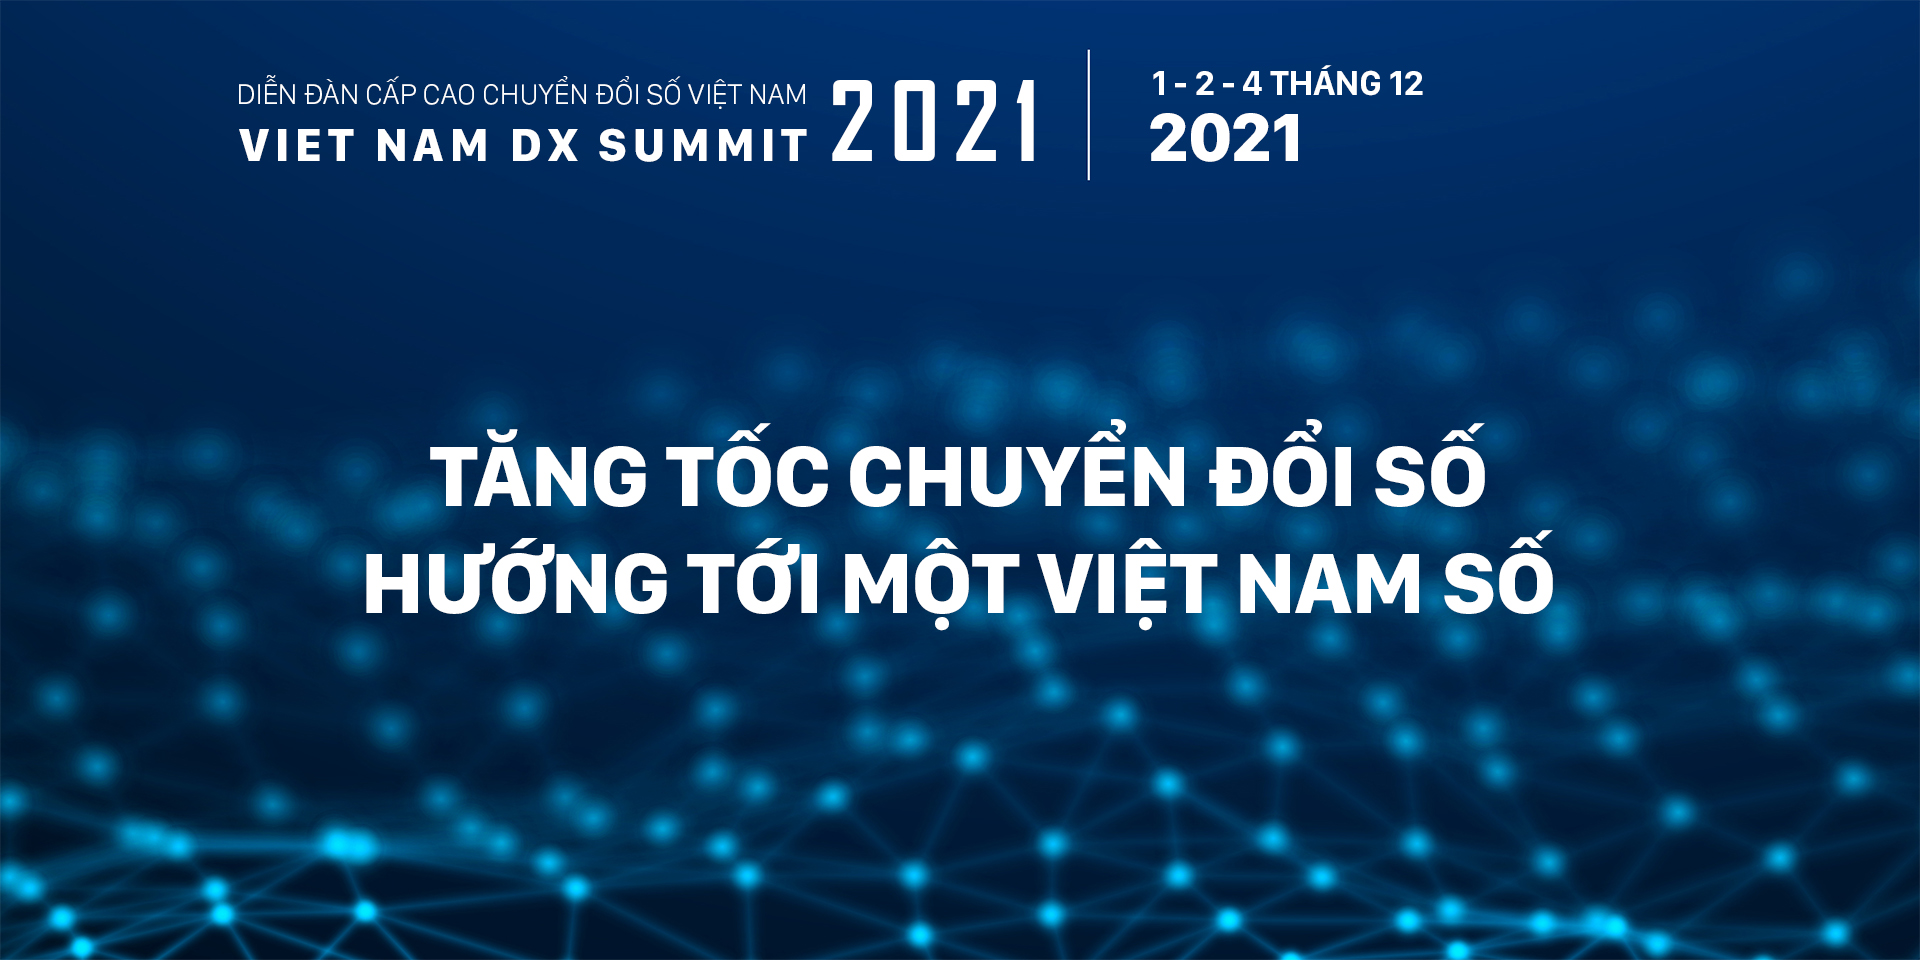 FPT Digital attends Vietnam DX Summit 2021